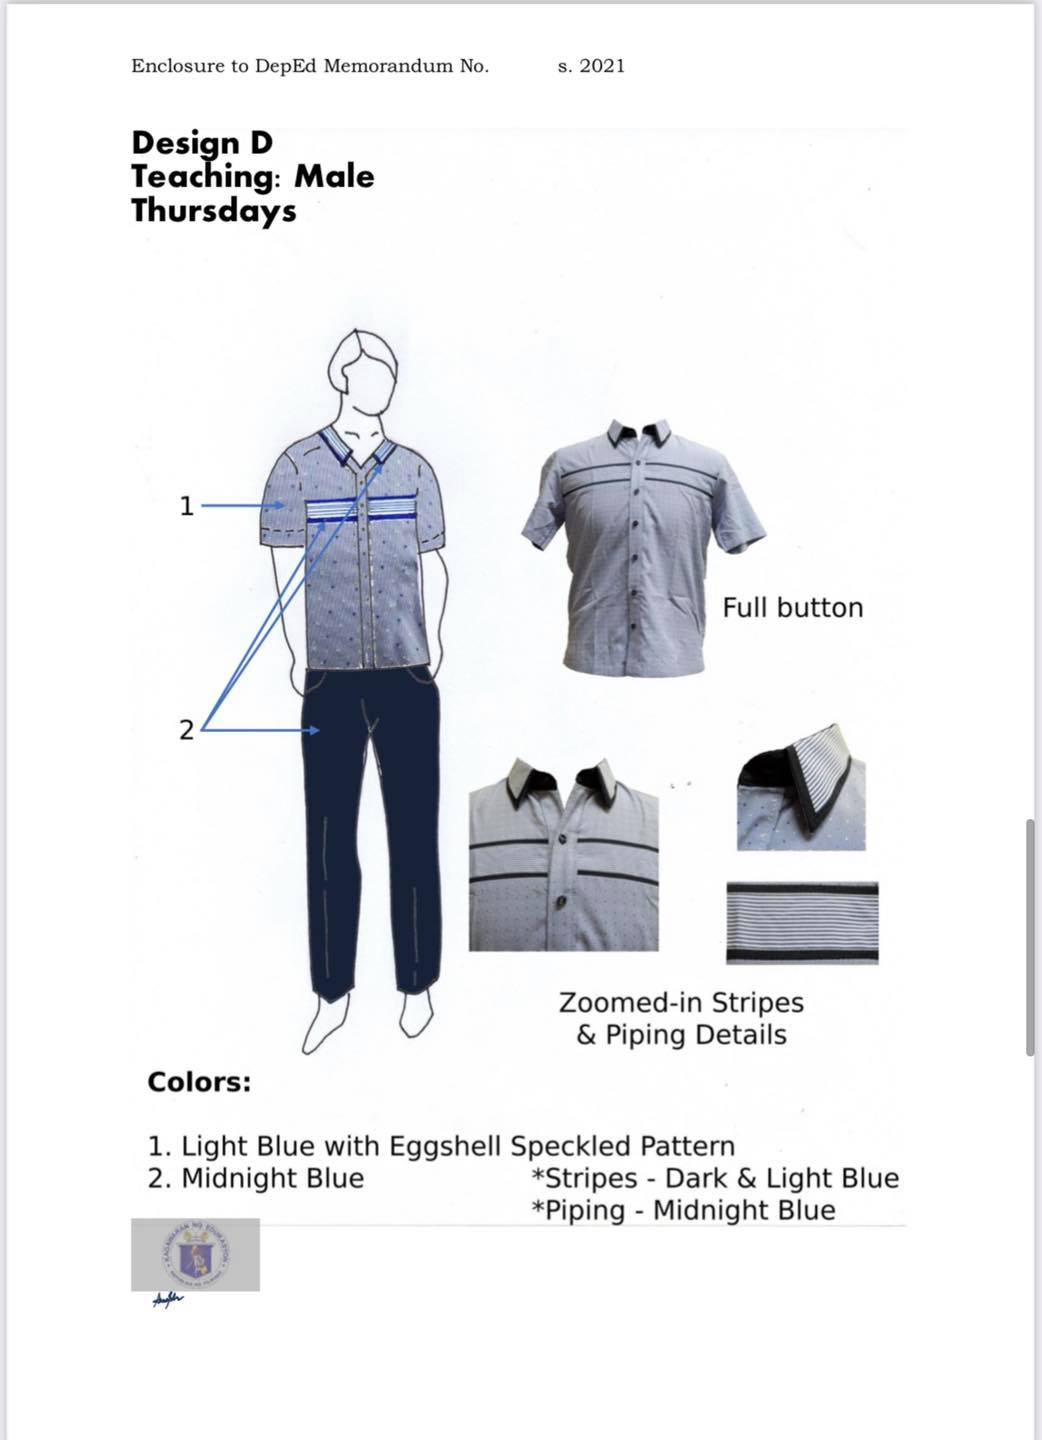 DepEd National Uniform Design D for Male Teaching Personnel (Thursdays)